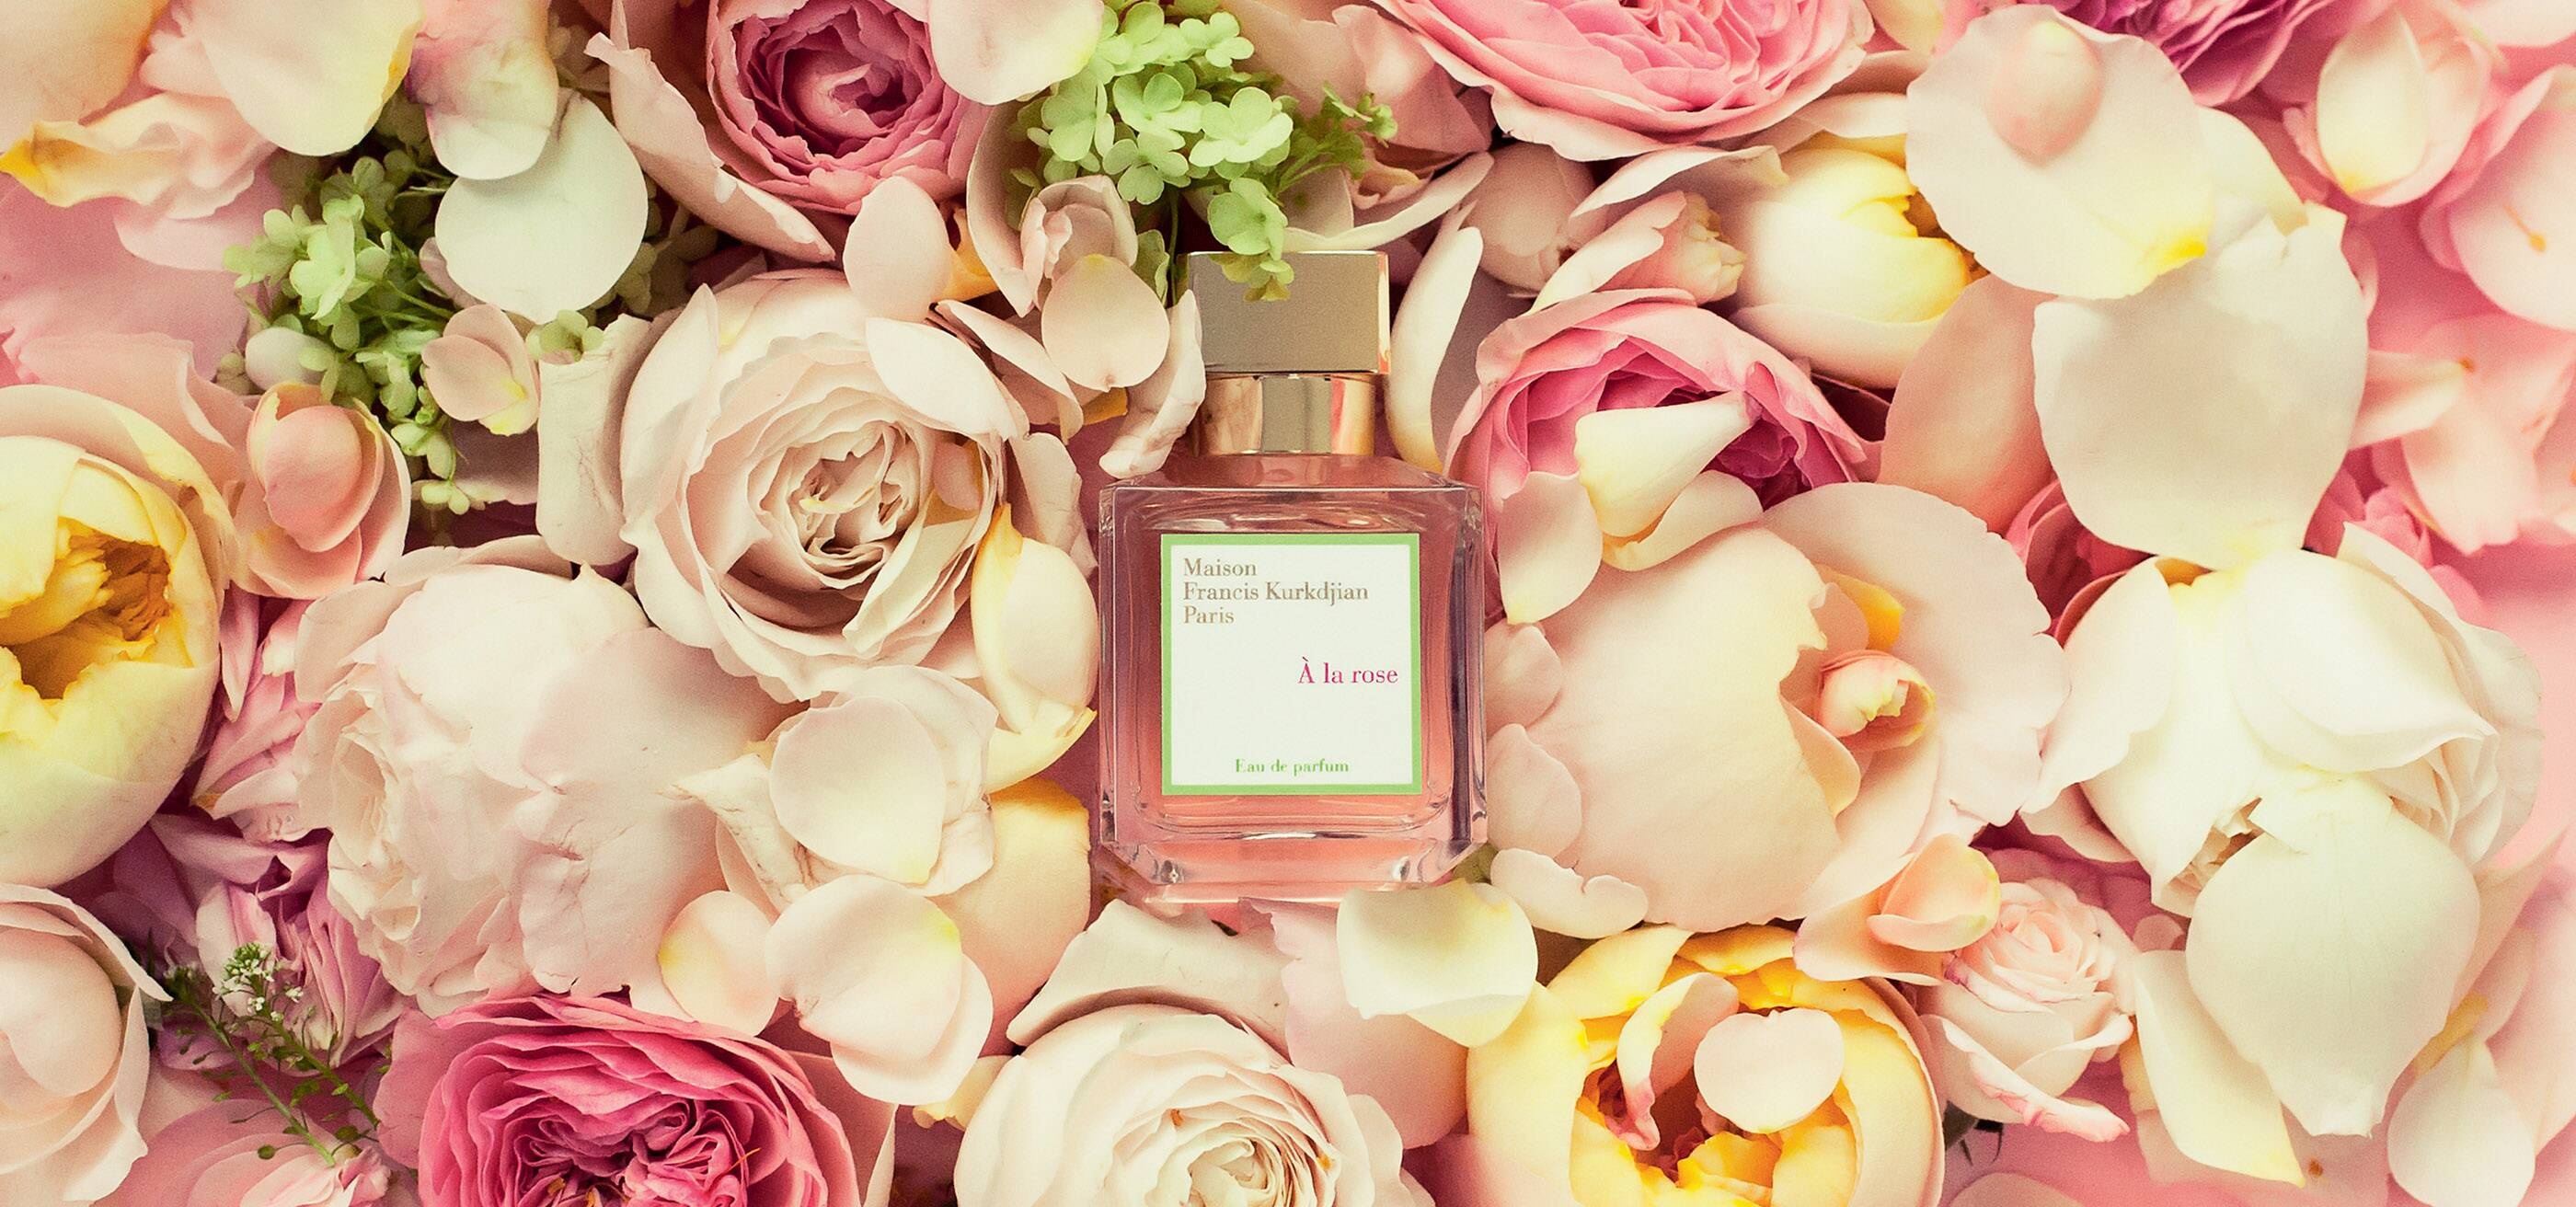 Maison Francis Kurkdjian, Perfumes & Cosmetics, LVMH, Luxury scents, 2800x1320 Dual Screen Desktop